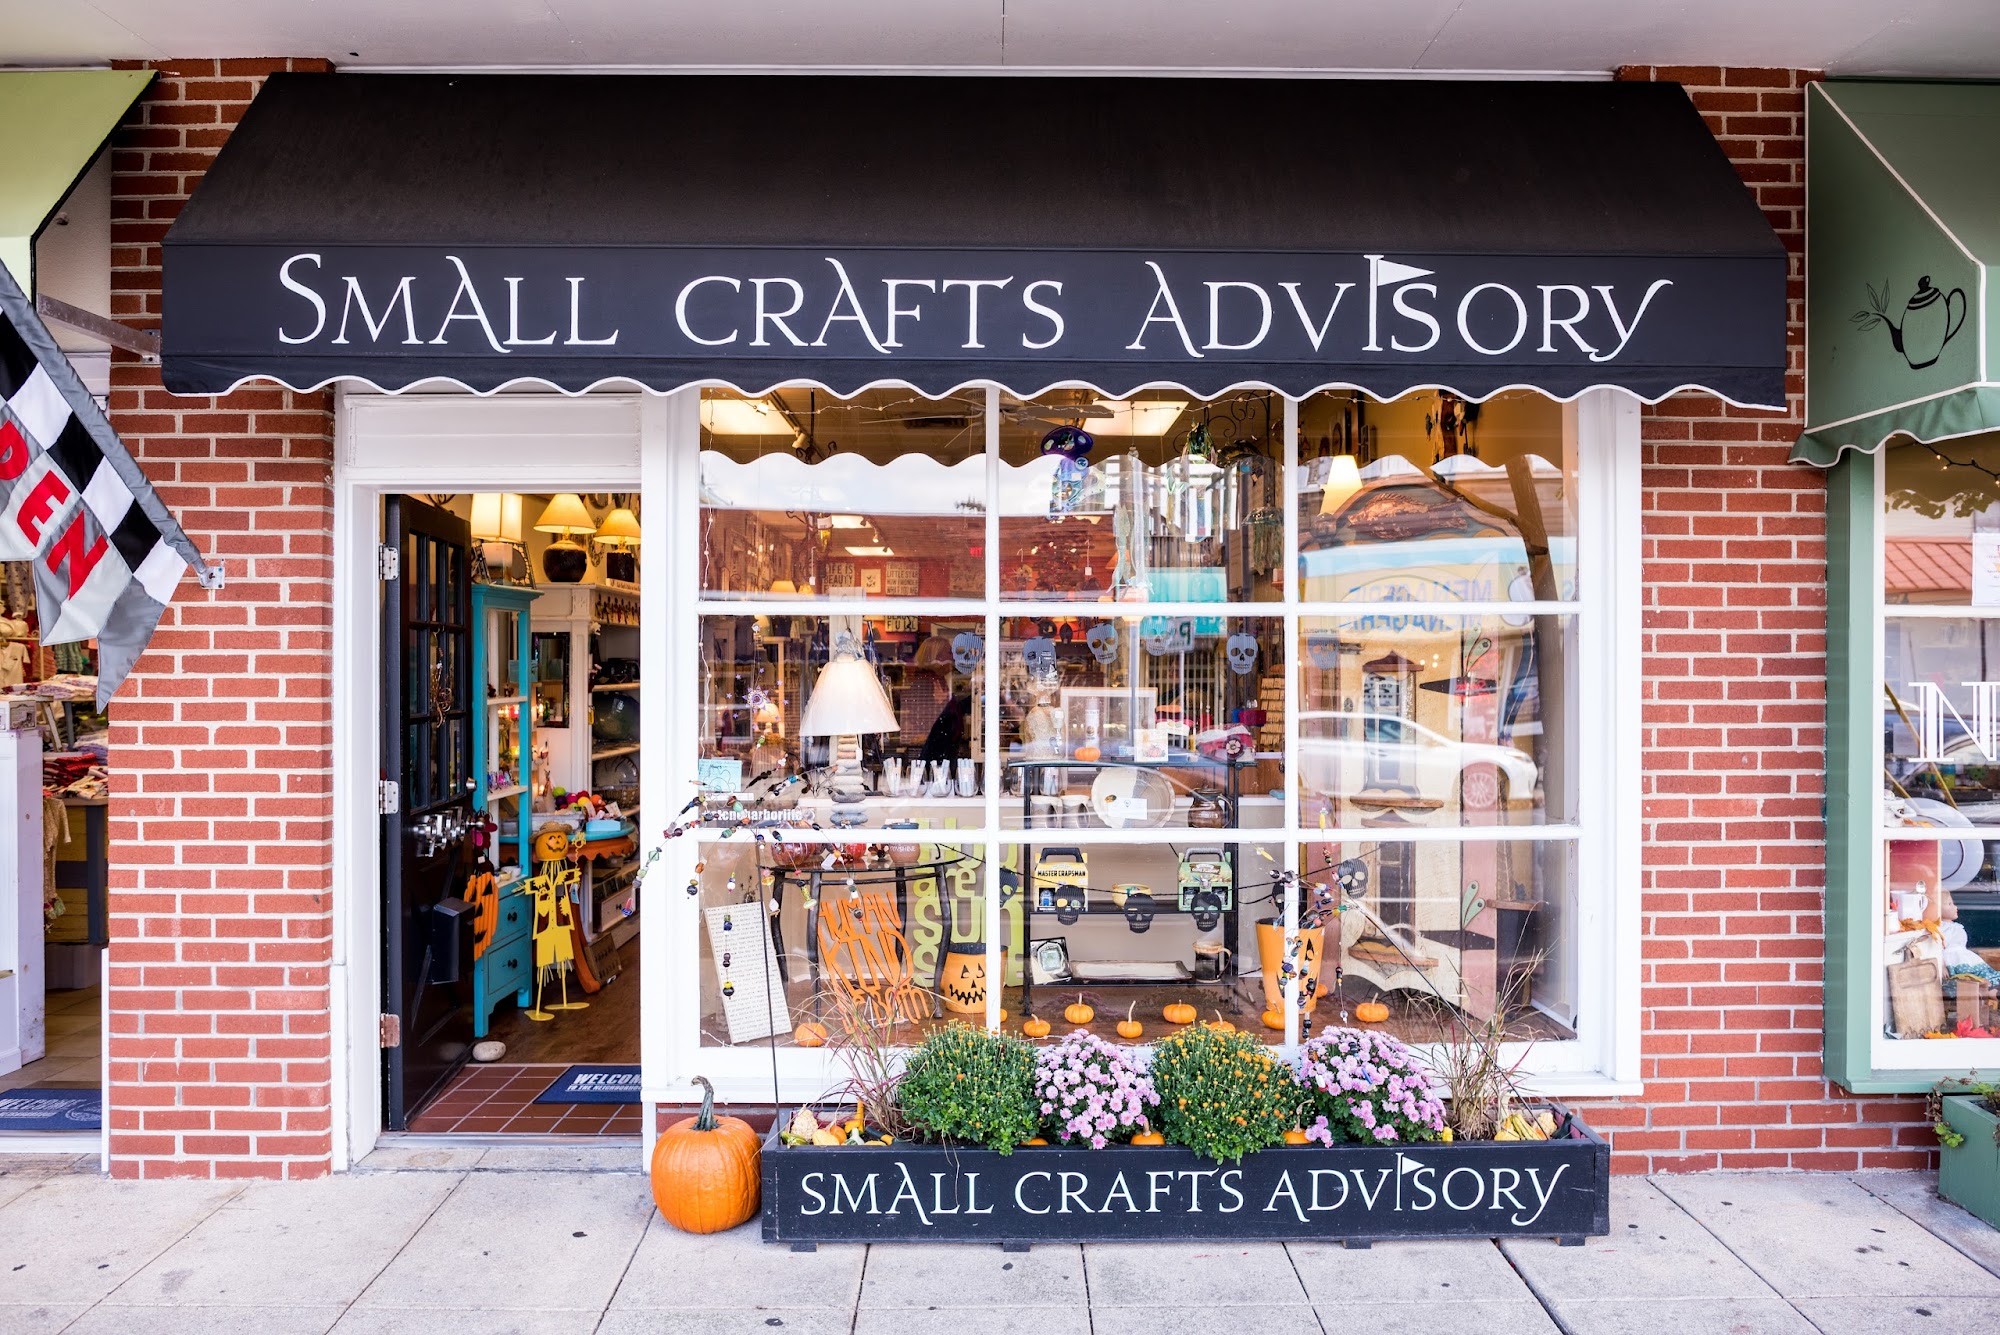 Small Crafts Advisory